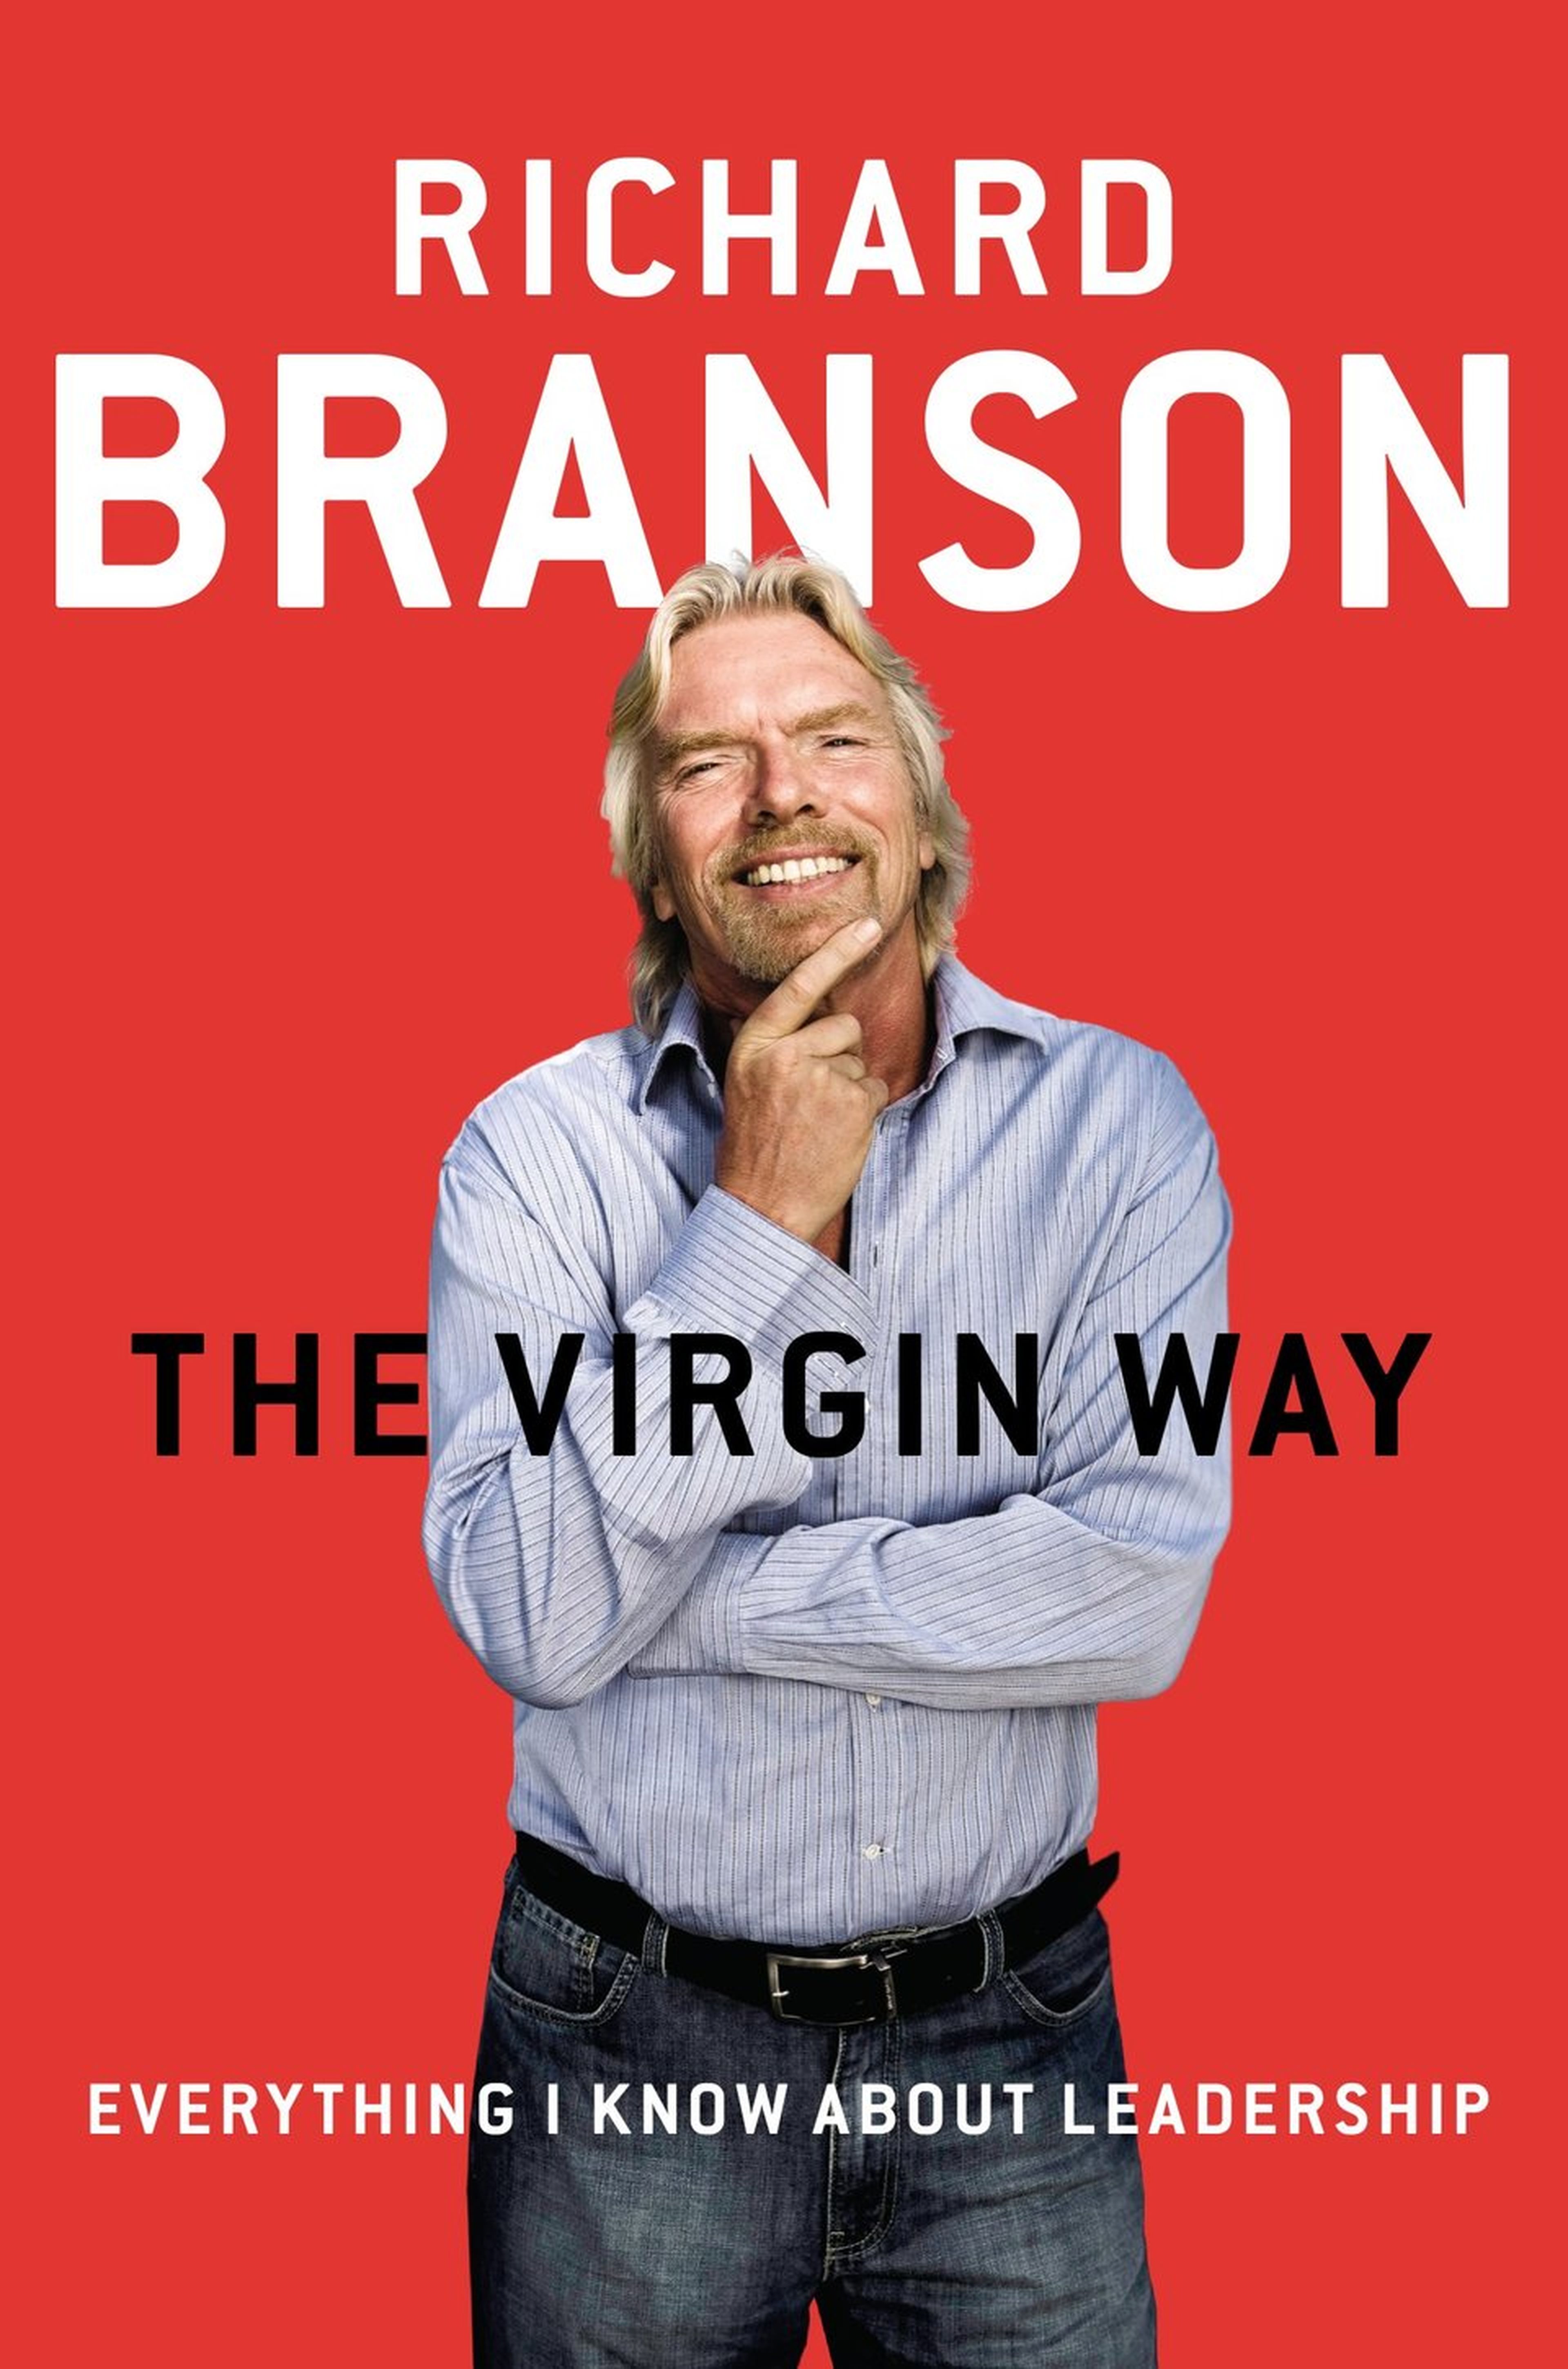 Libro Richard Branson